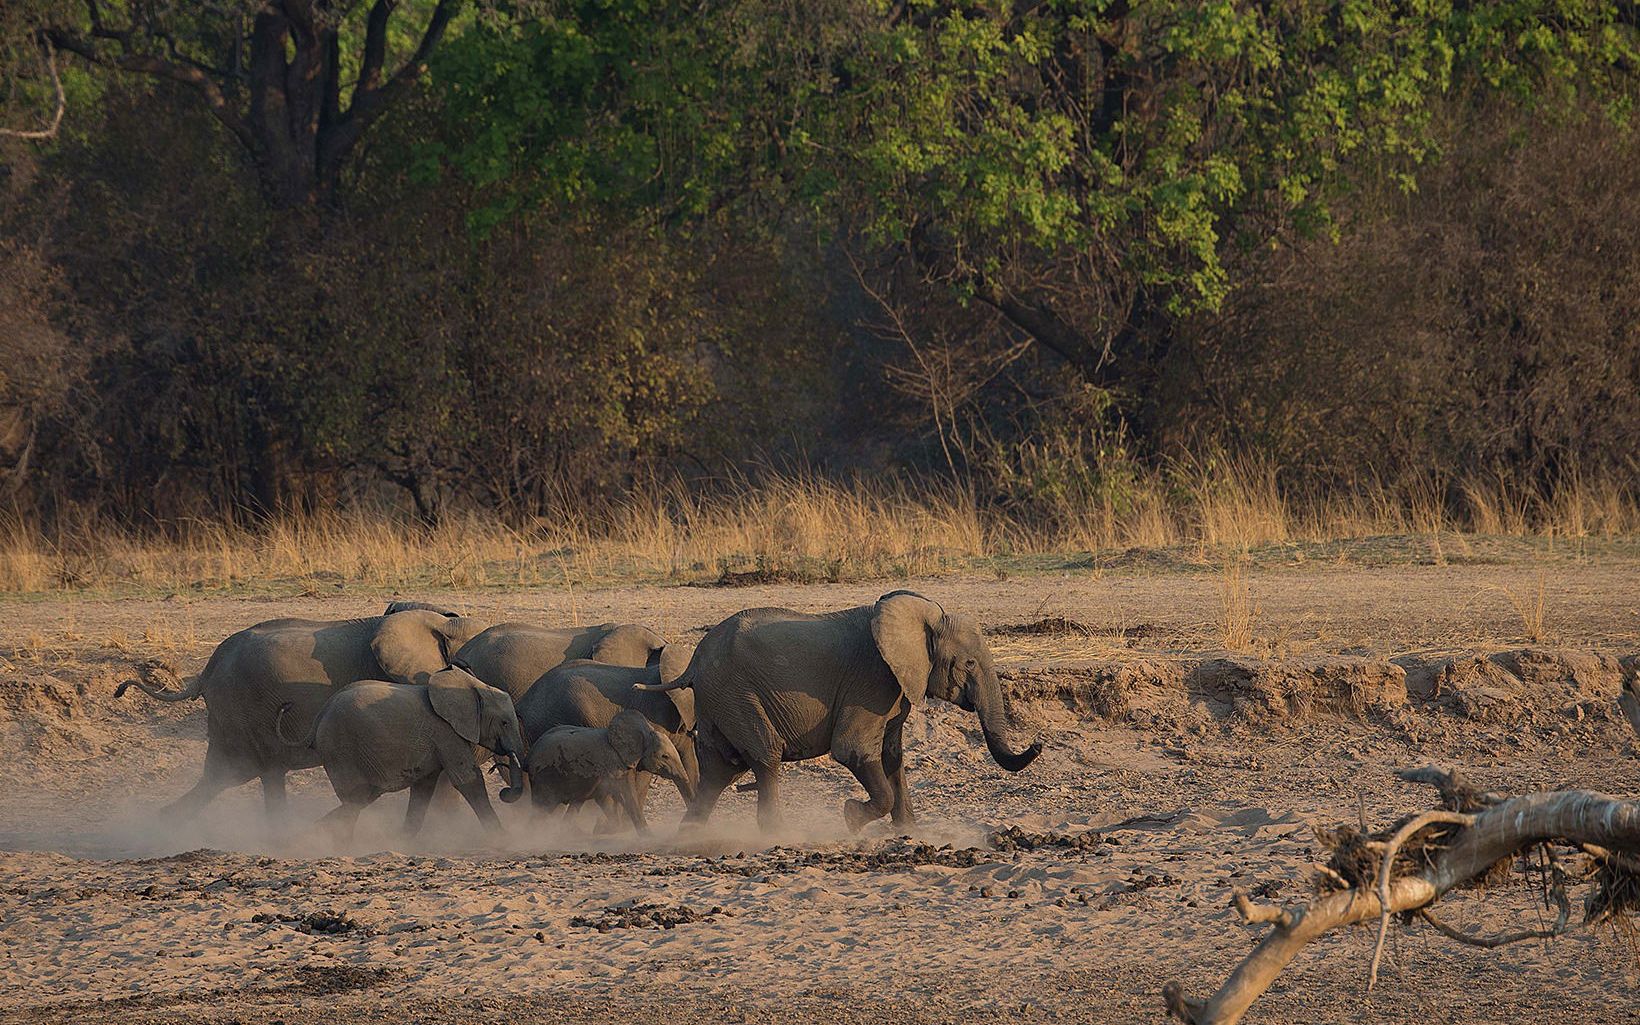 Elephants in Luangwa, Zambia.